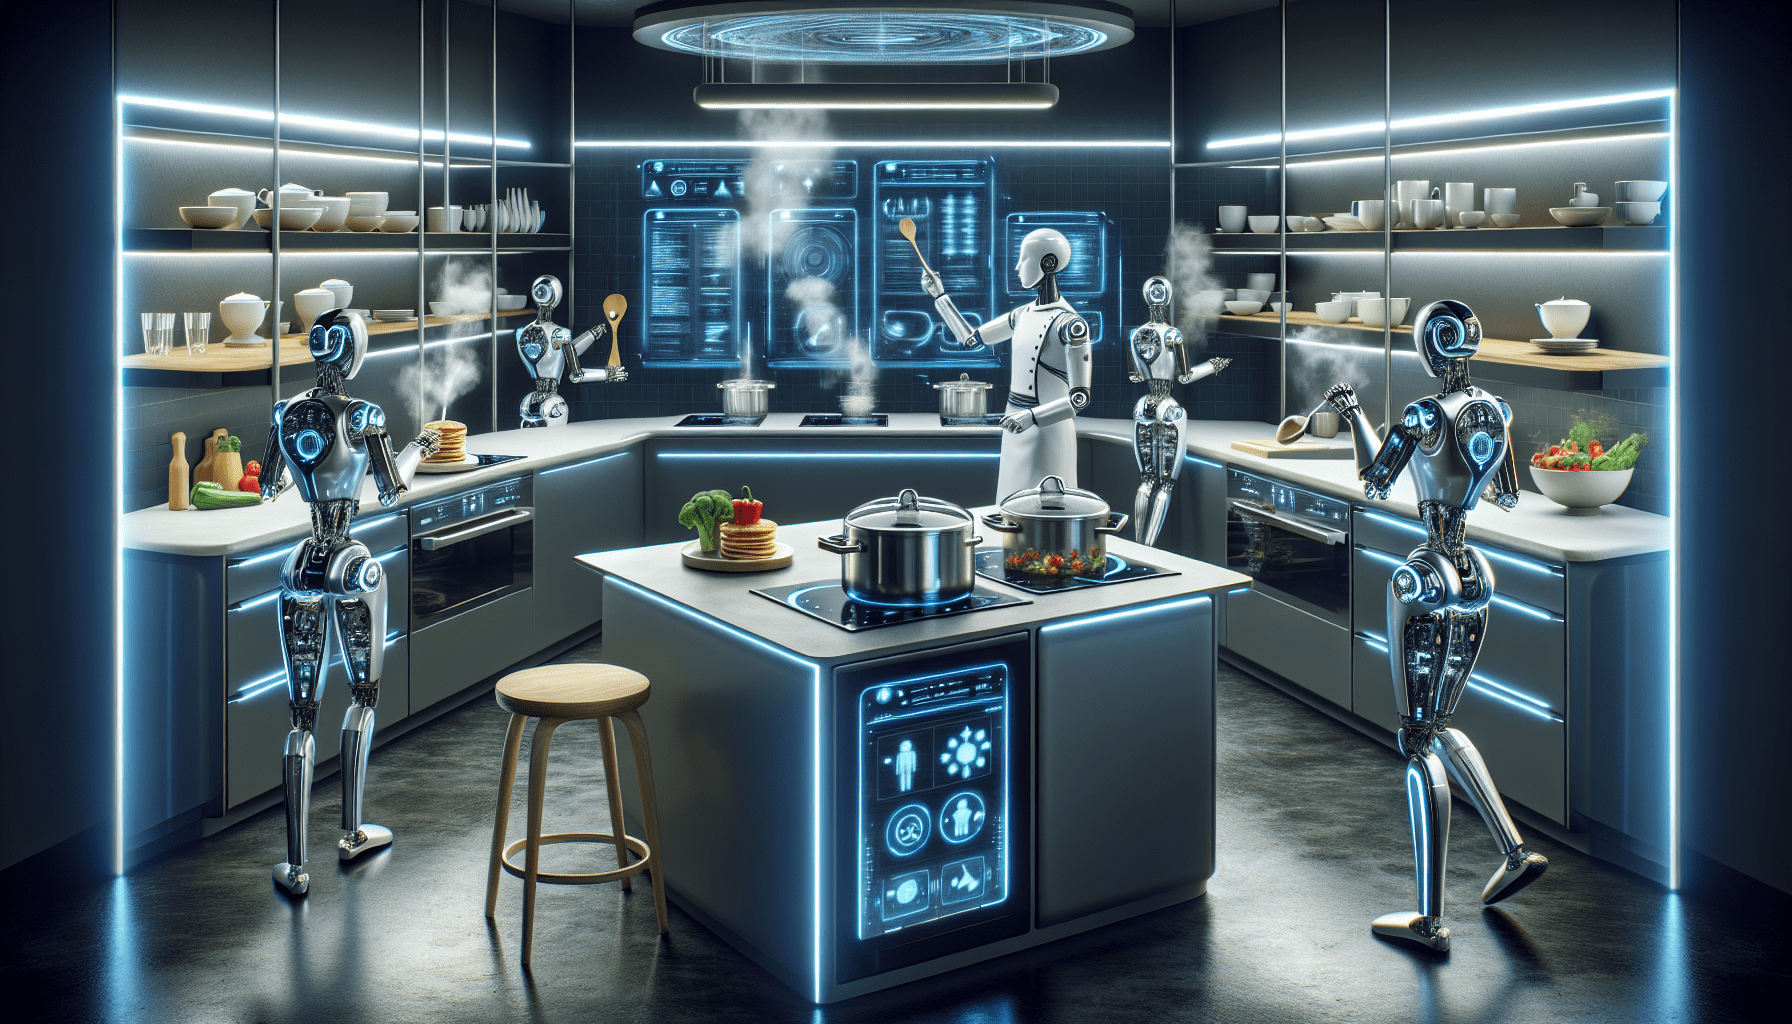 Illustration of a futuristic robotic kitchen with advanced AI technology